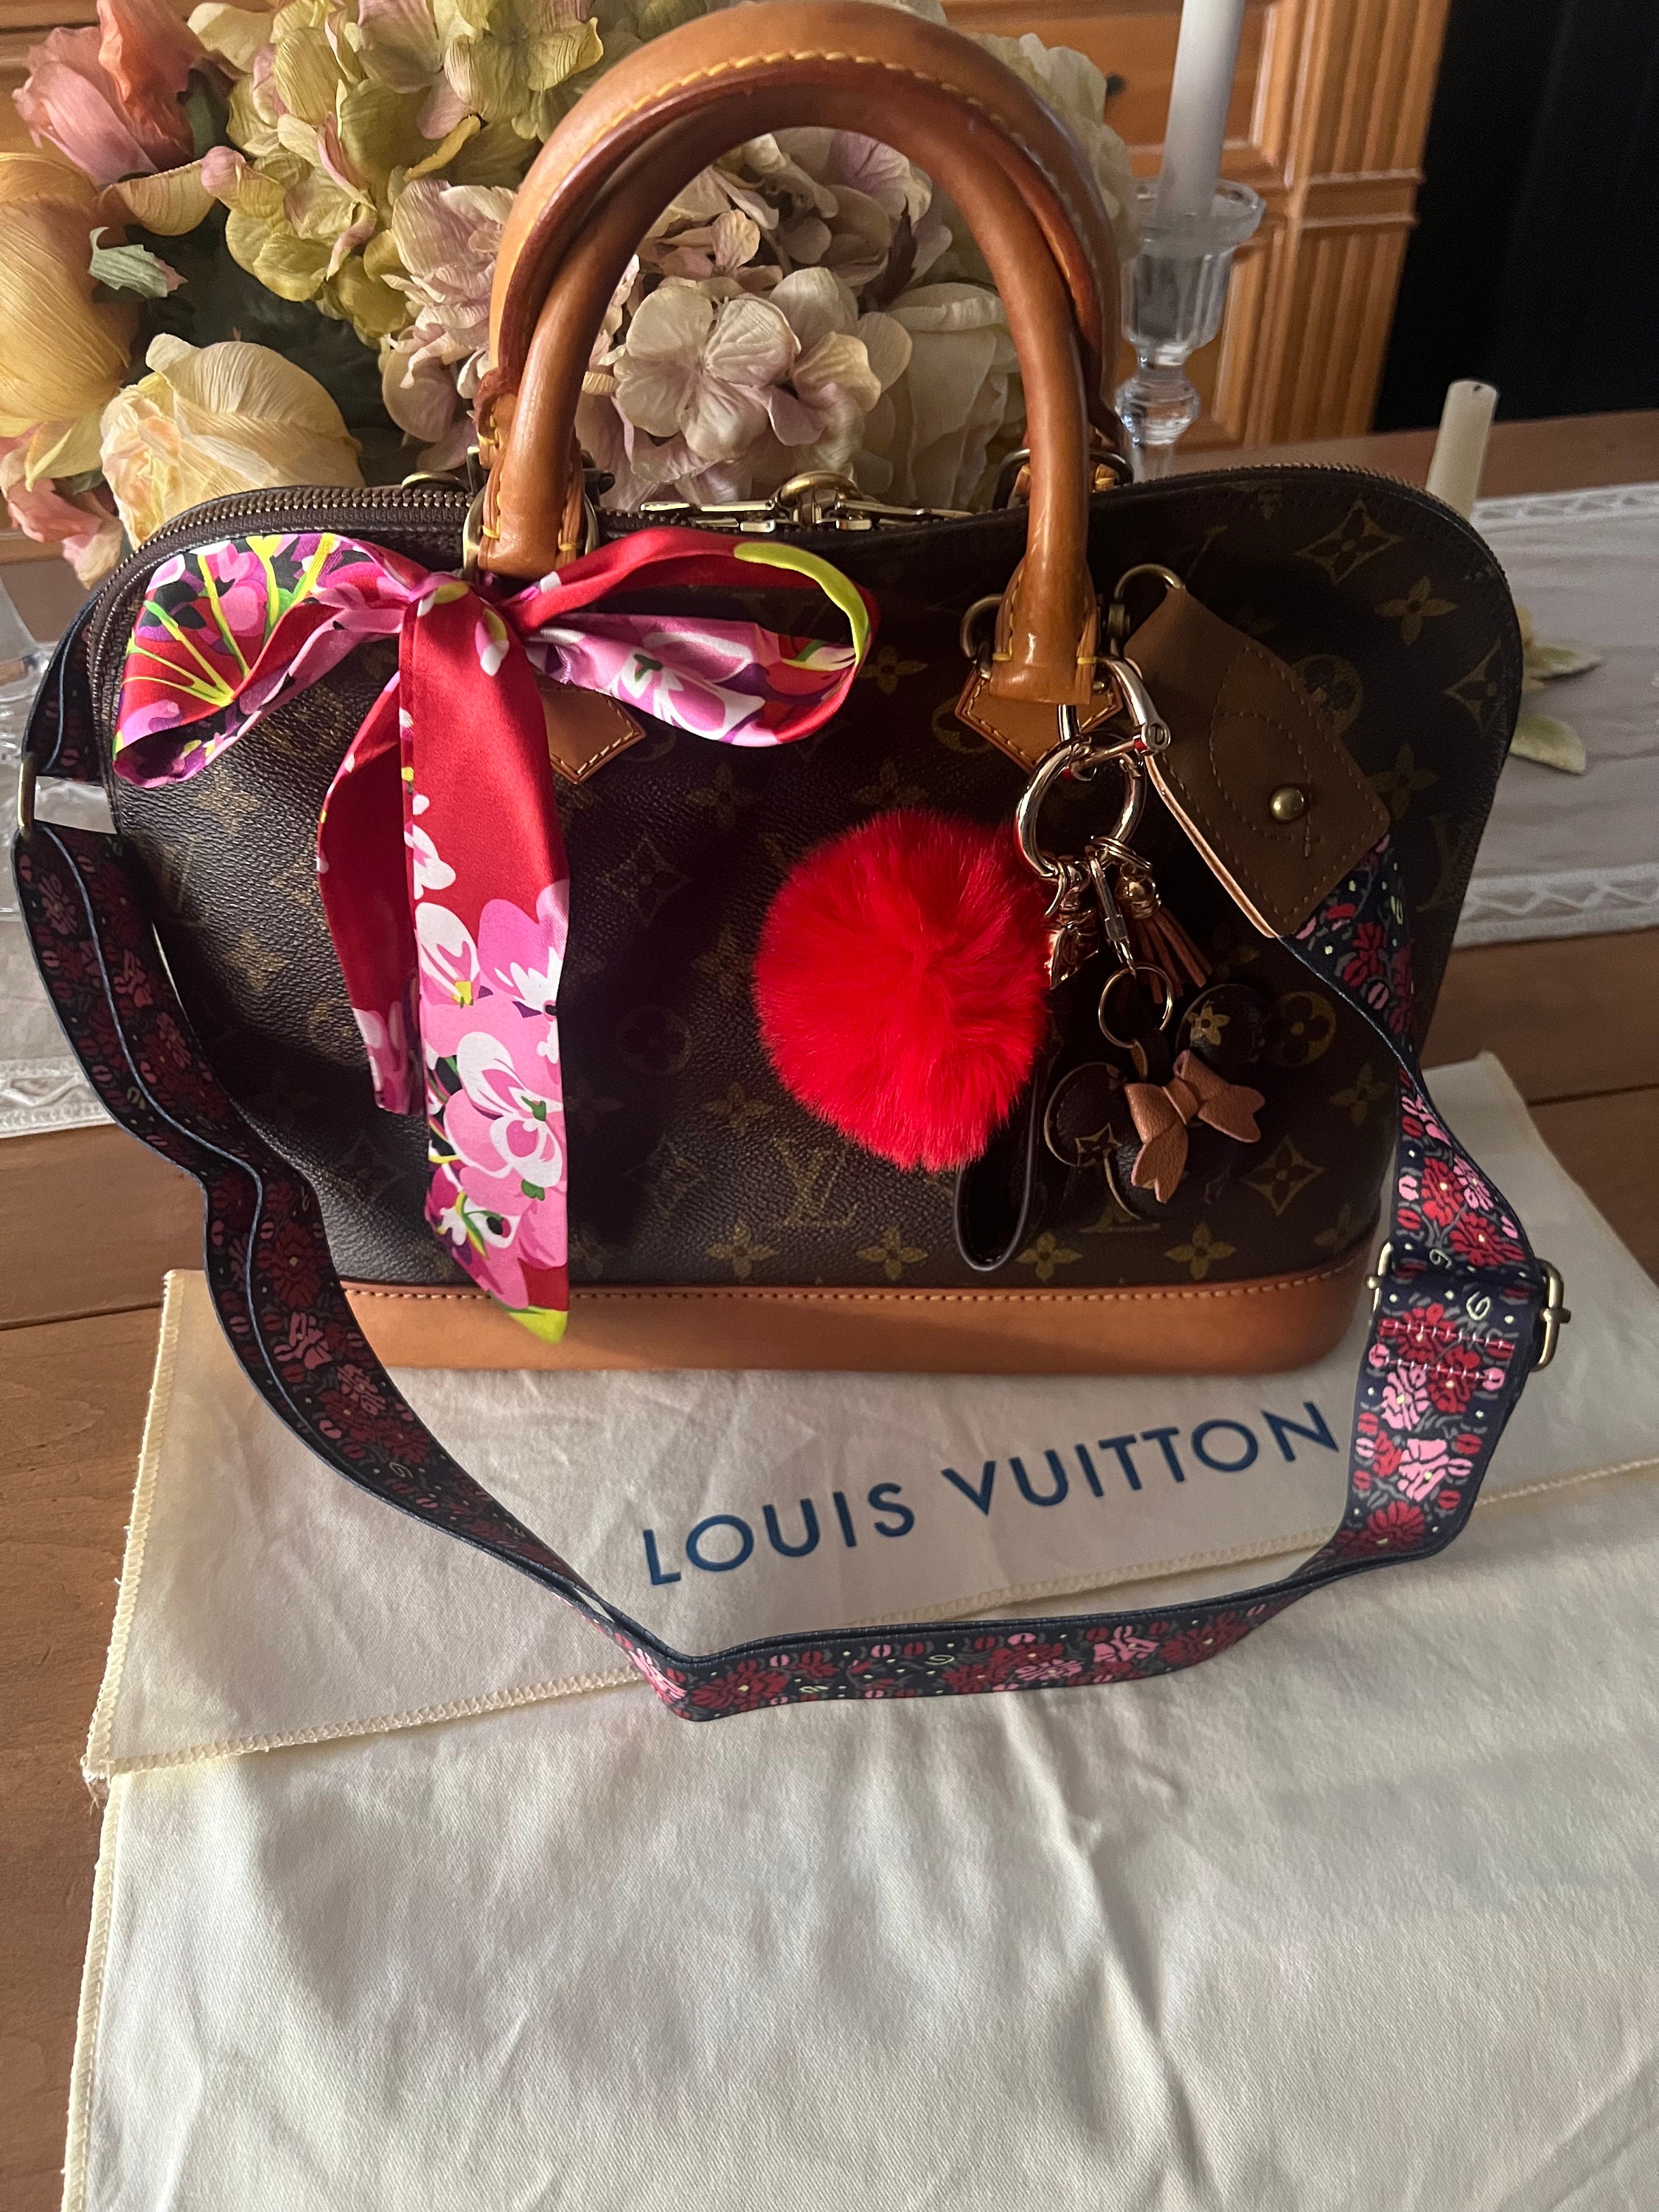 Louis Vuitton Nice 